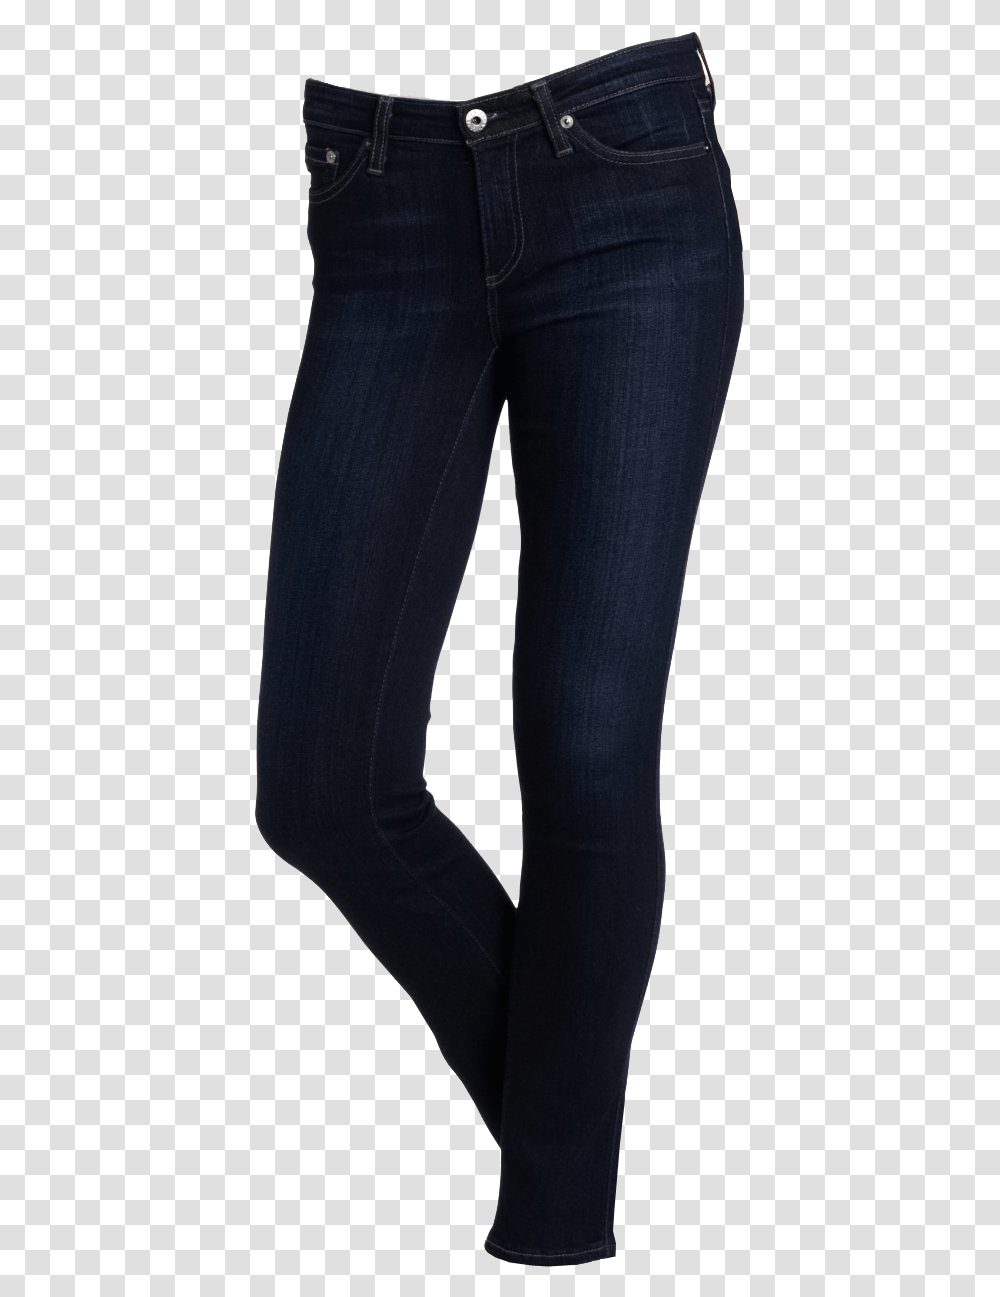 Skinny Jeans Tights, Pants, Apparel, Denim Transparent Png